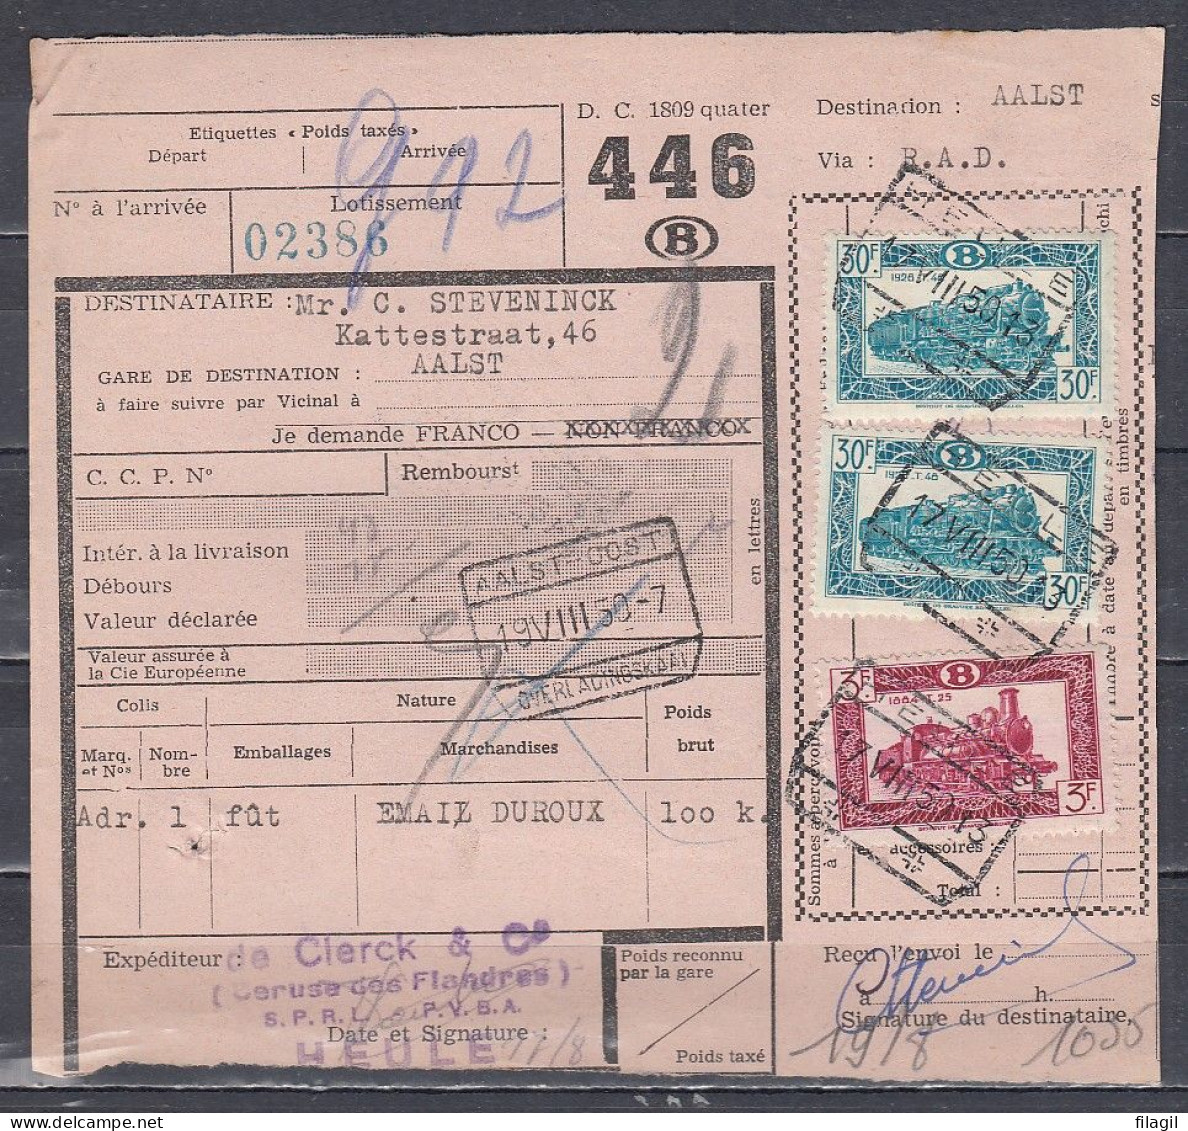 Vrachtbrief Met Stempel HEULE - Documents & Fragments